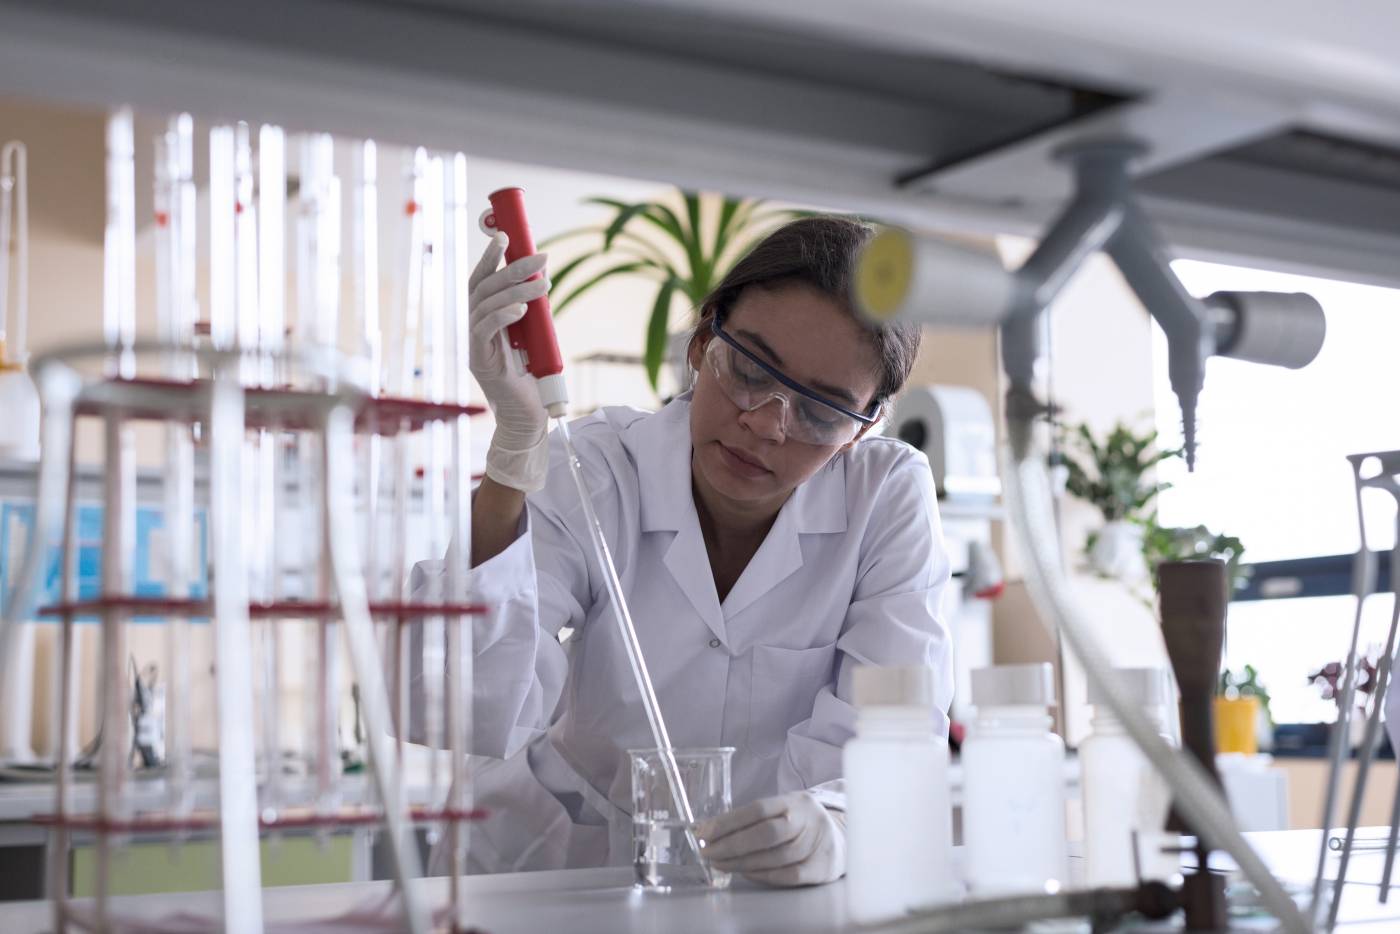 Scientist using a pipette in a lab